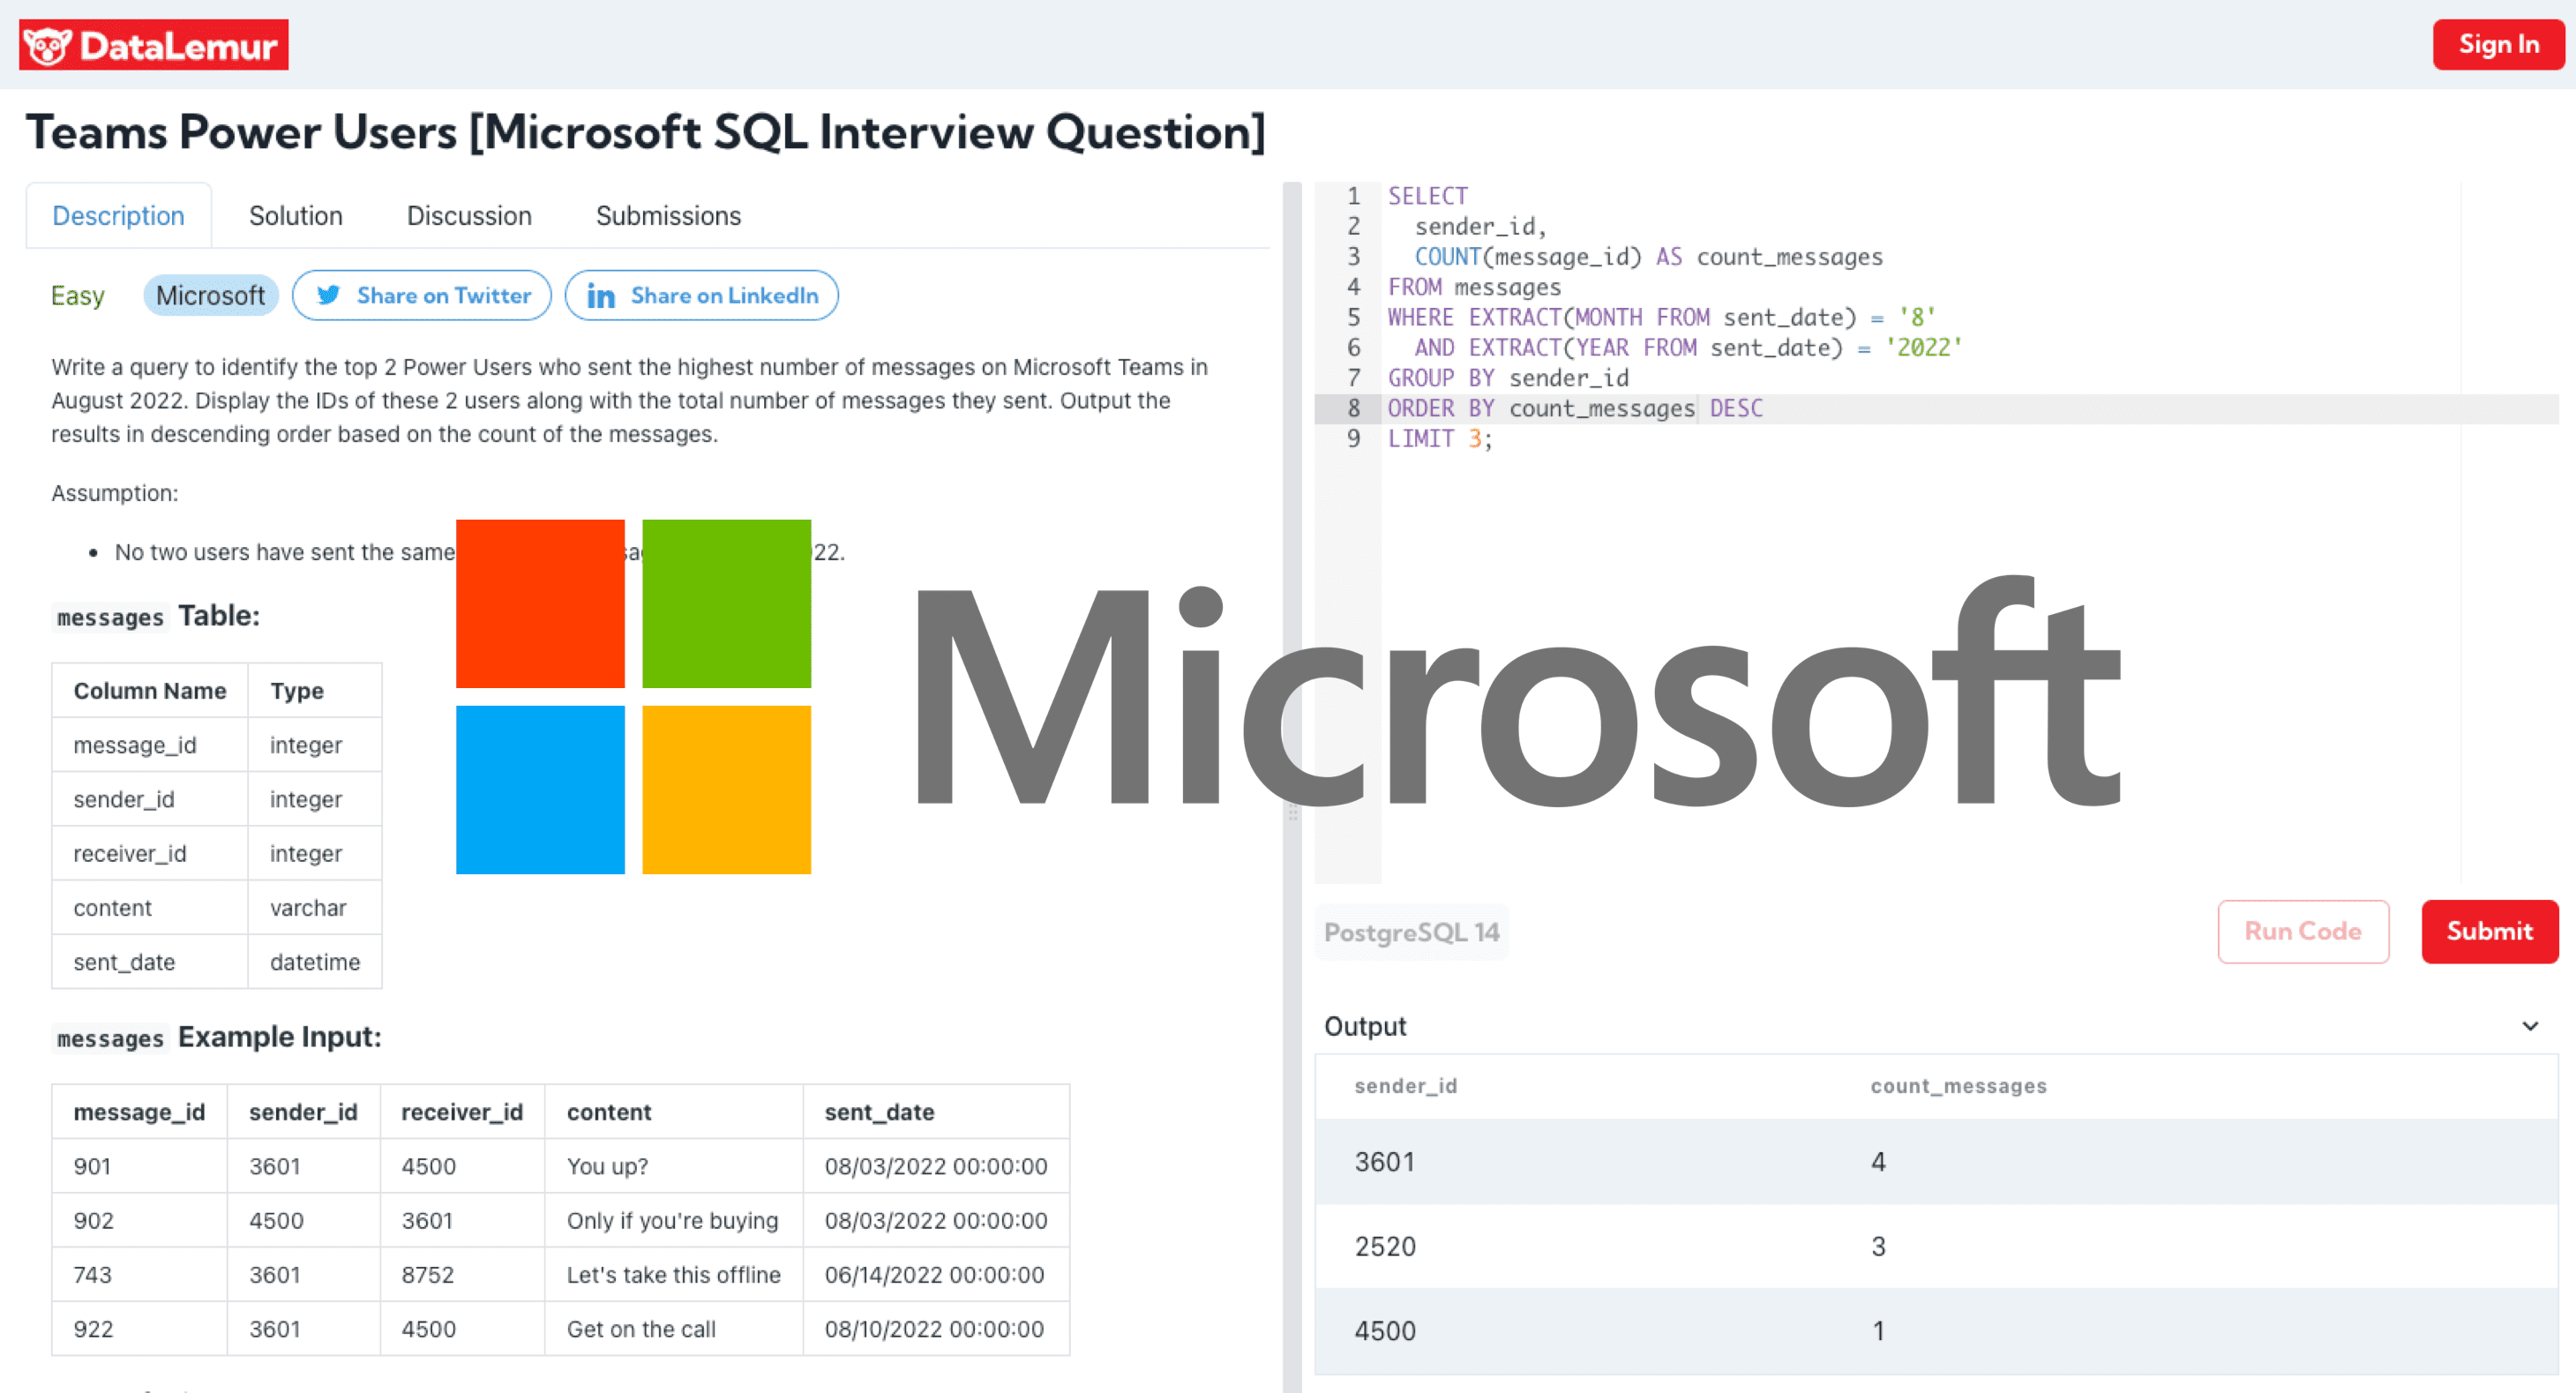 Microsoft SQL Interview Question: Super Cloud Customer